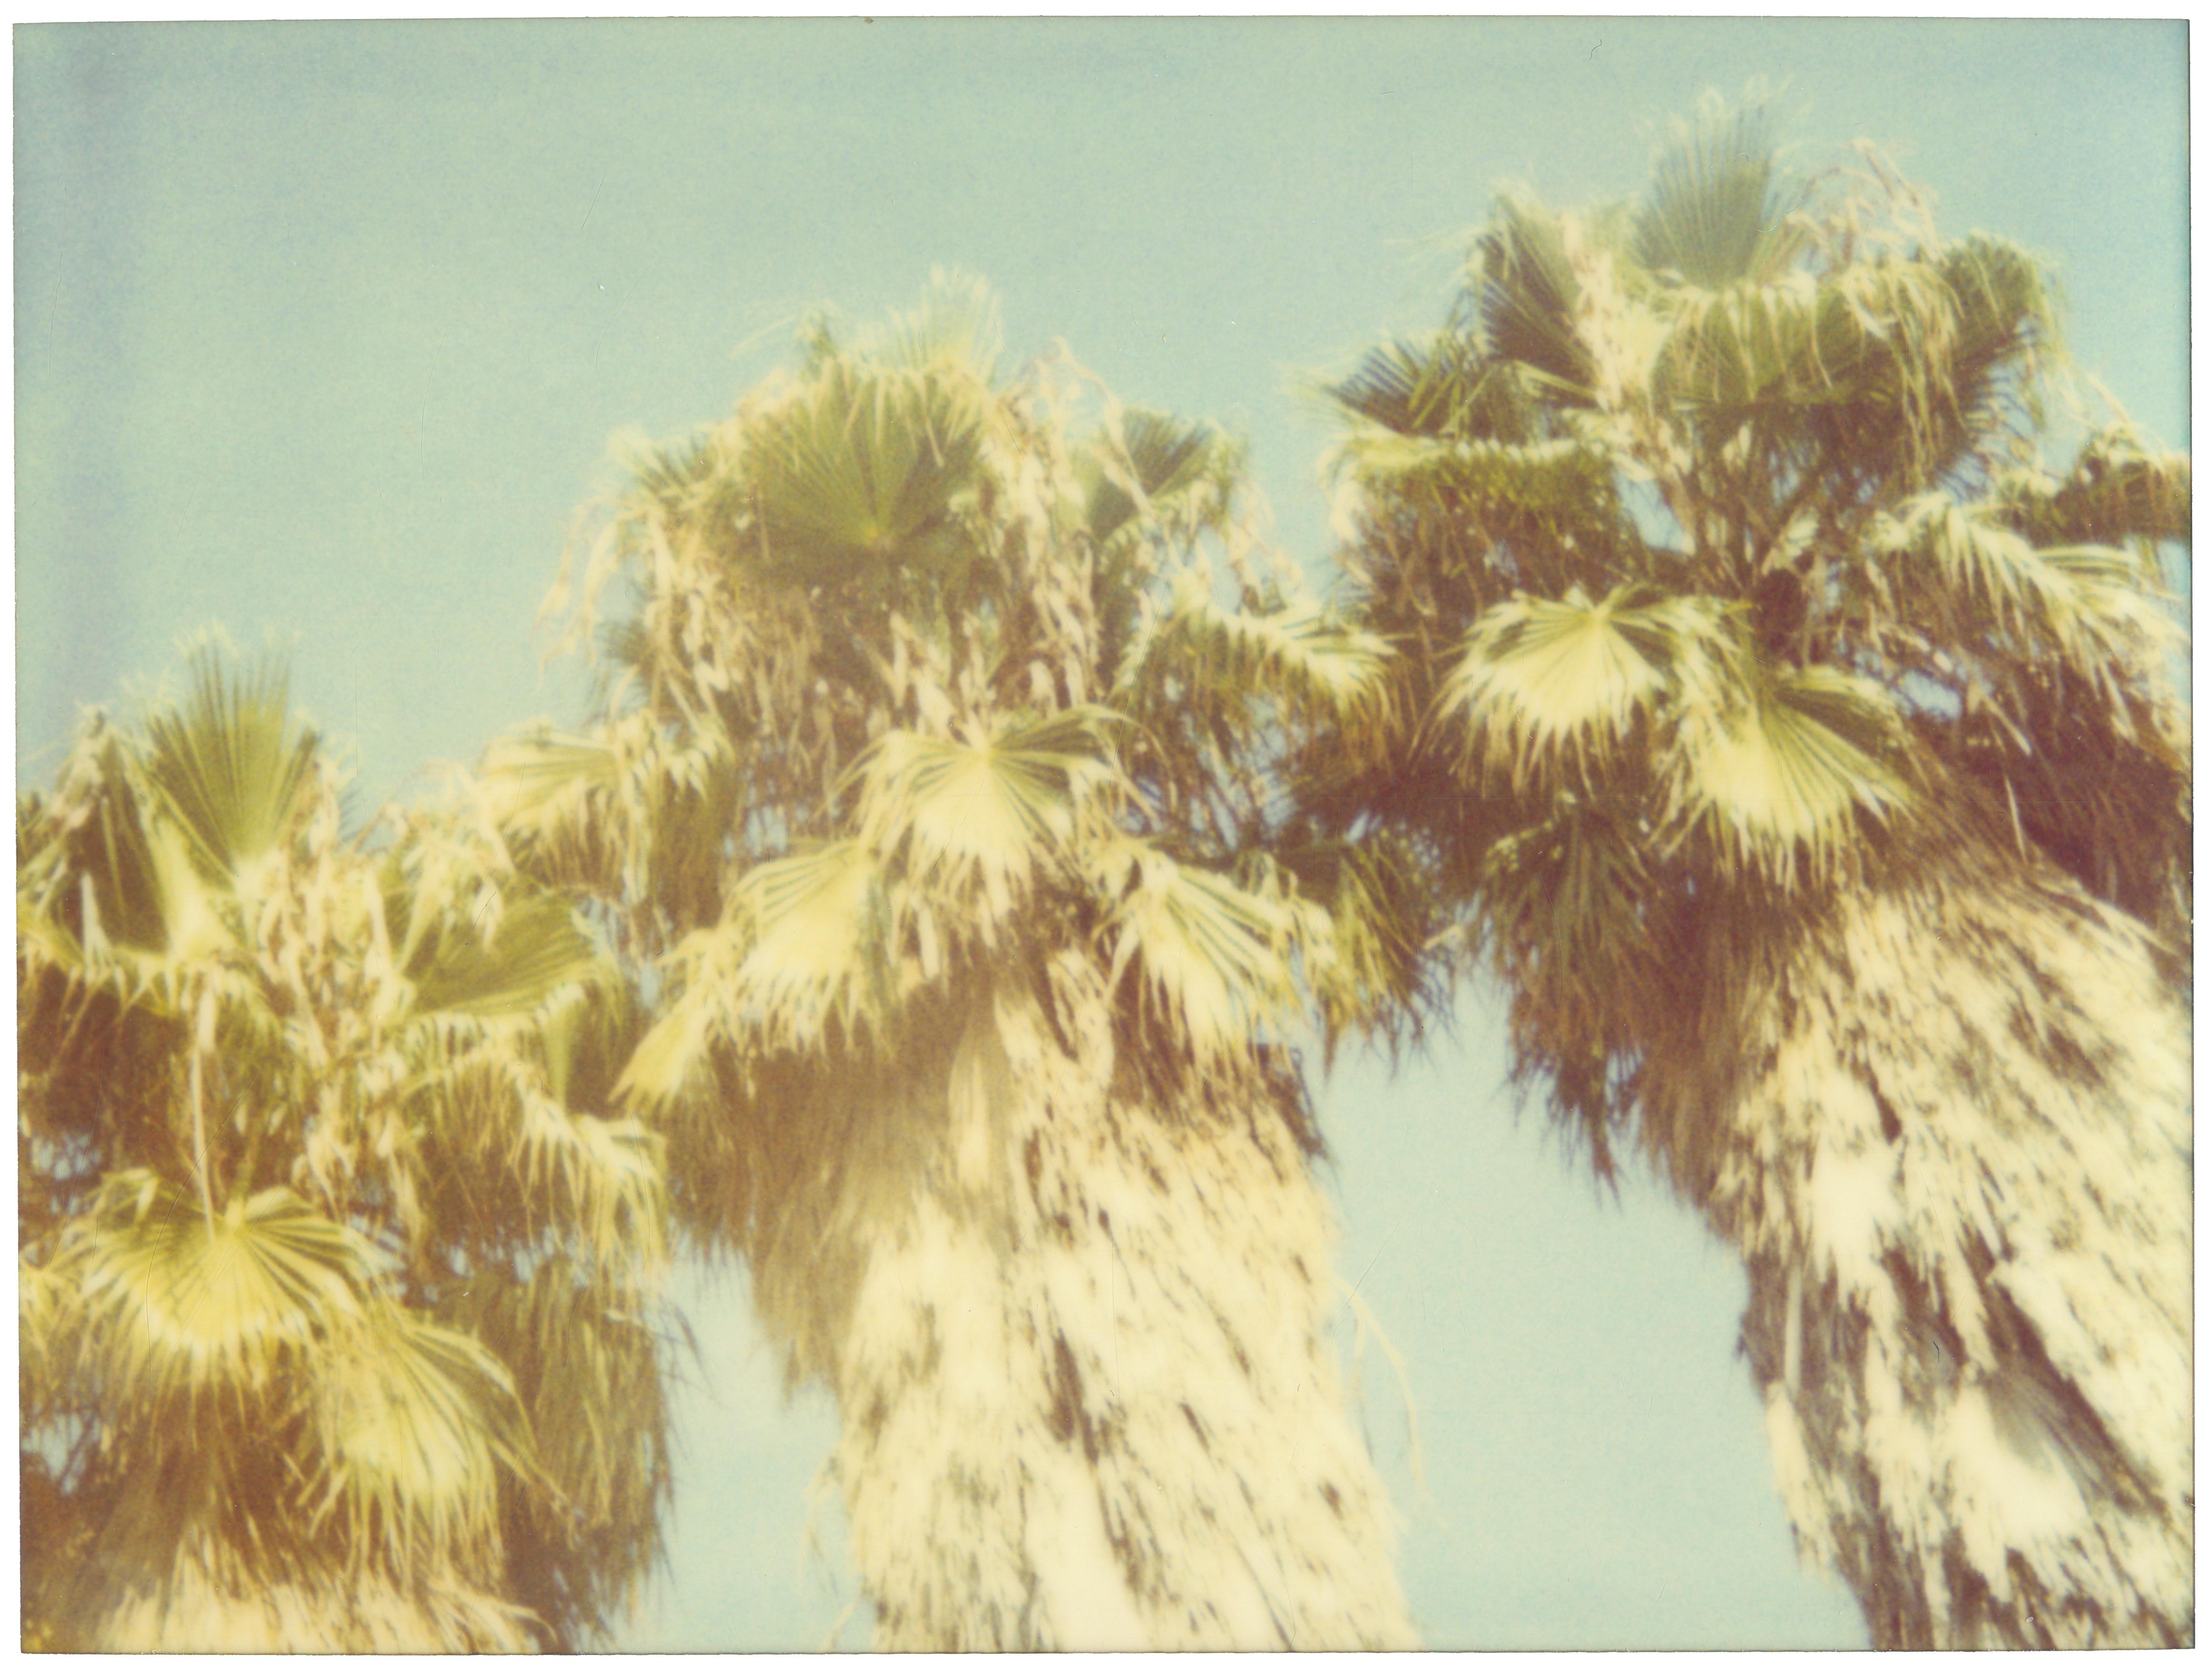 Stefanie Schneider Portrait Photograph - 3 Palm Trees (Stranger than Paradise) - analog, mounted, 114x142cm